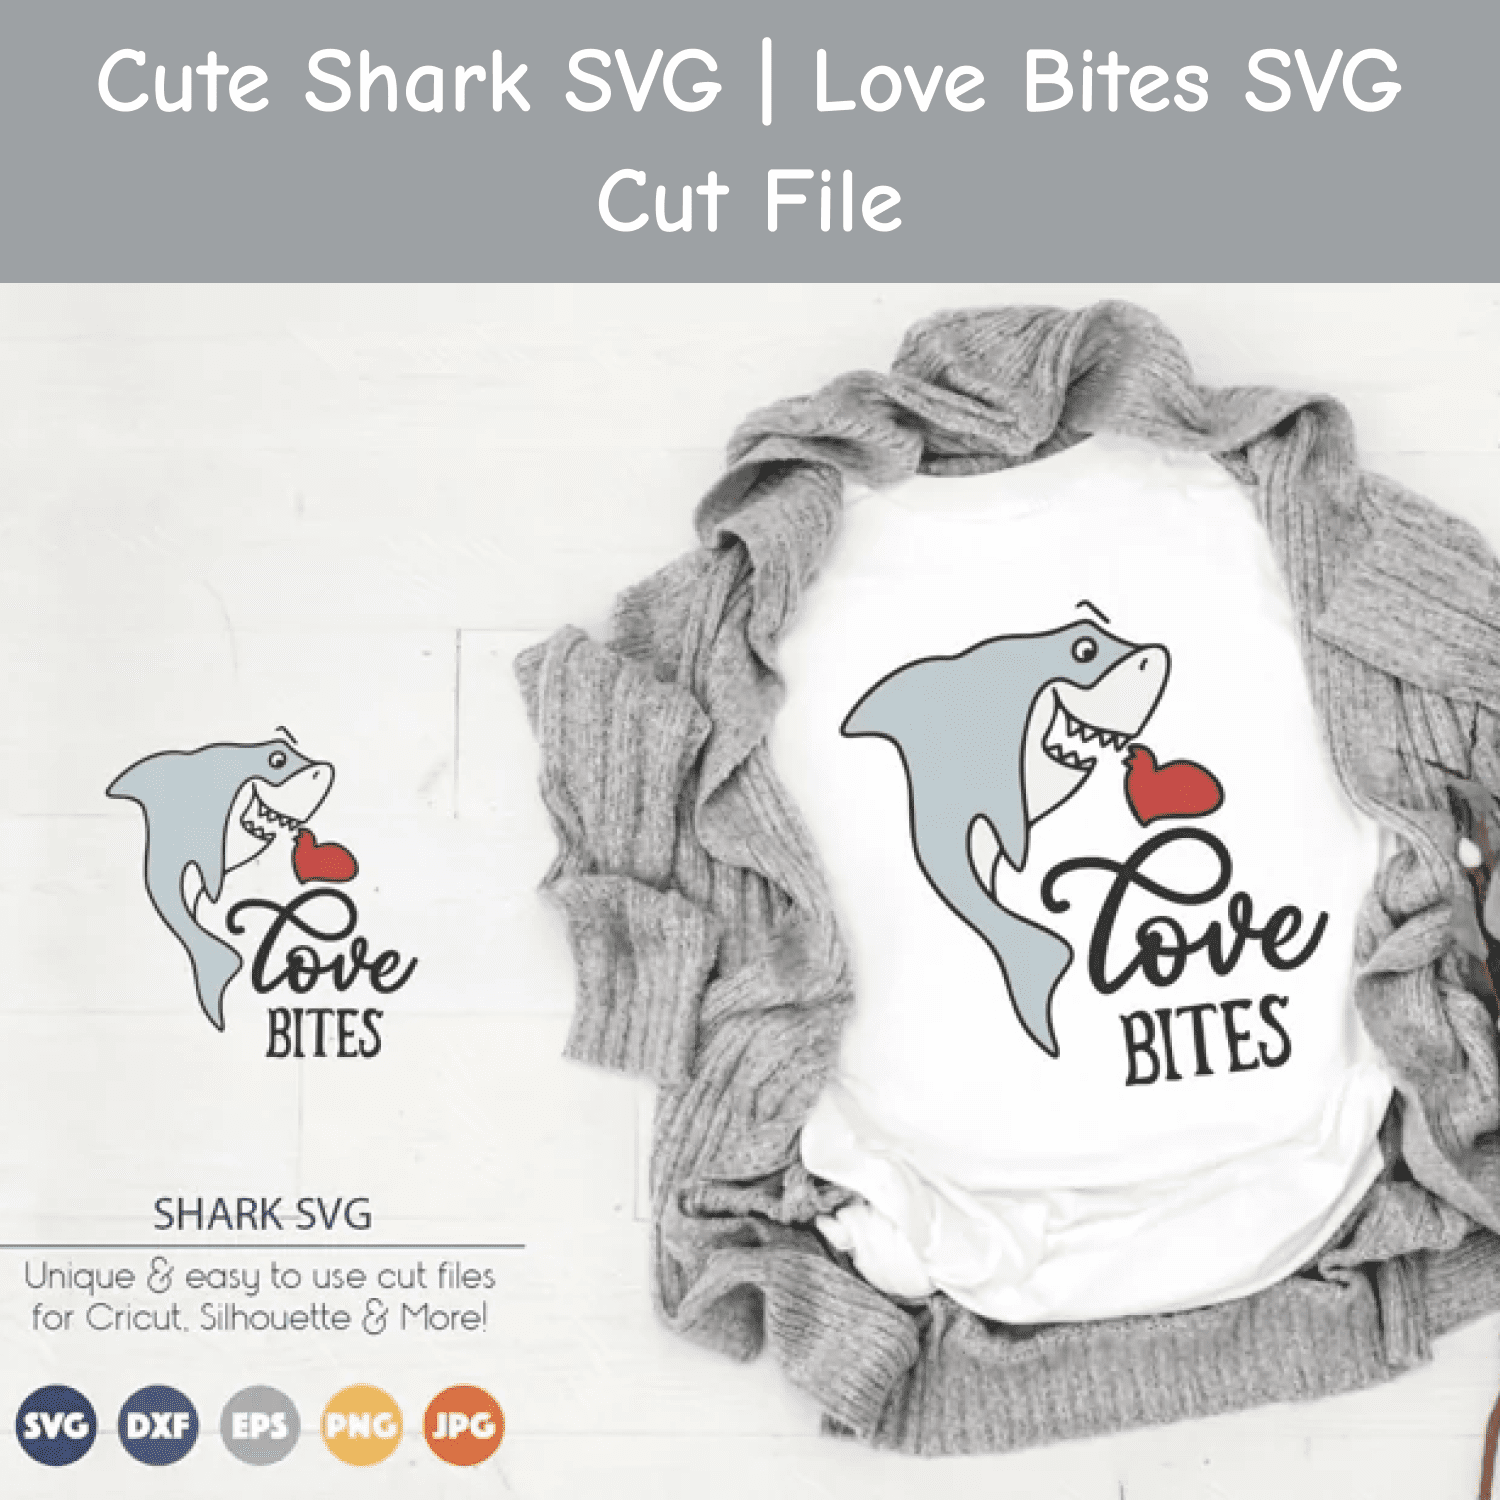 Cute Shark SVG | Love Bites SVG Cut File cover.